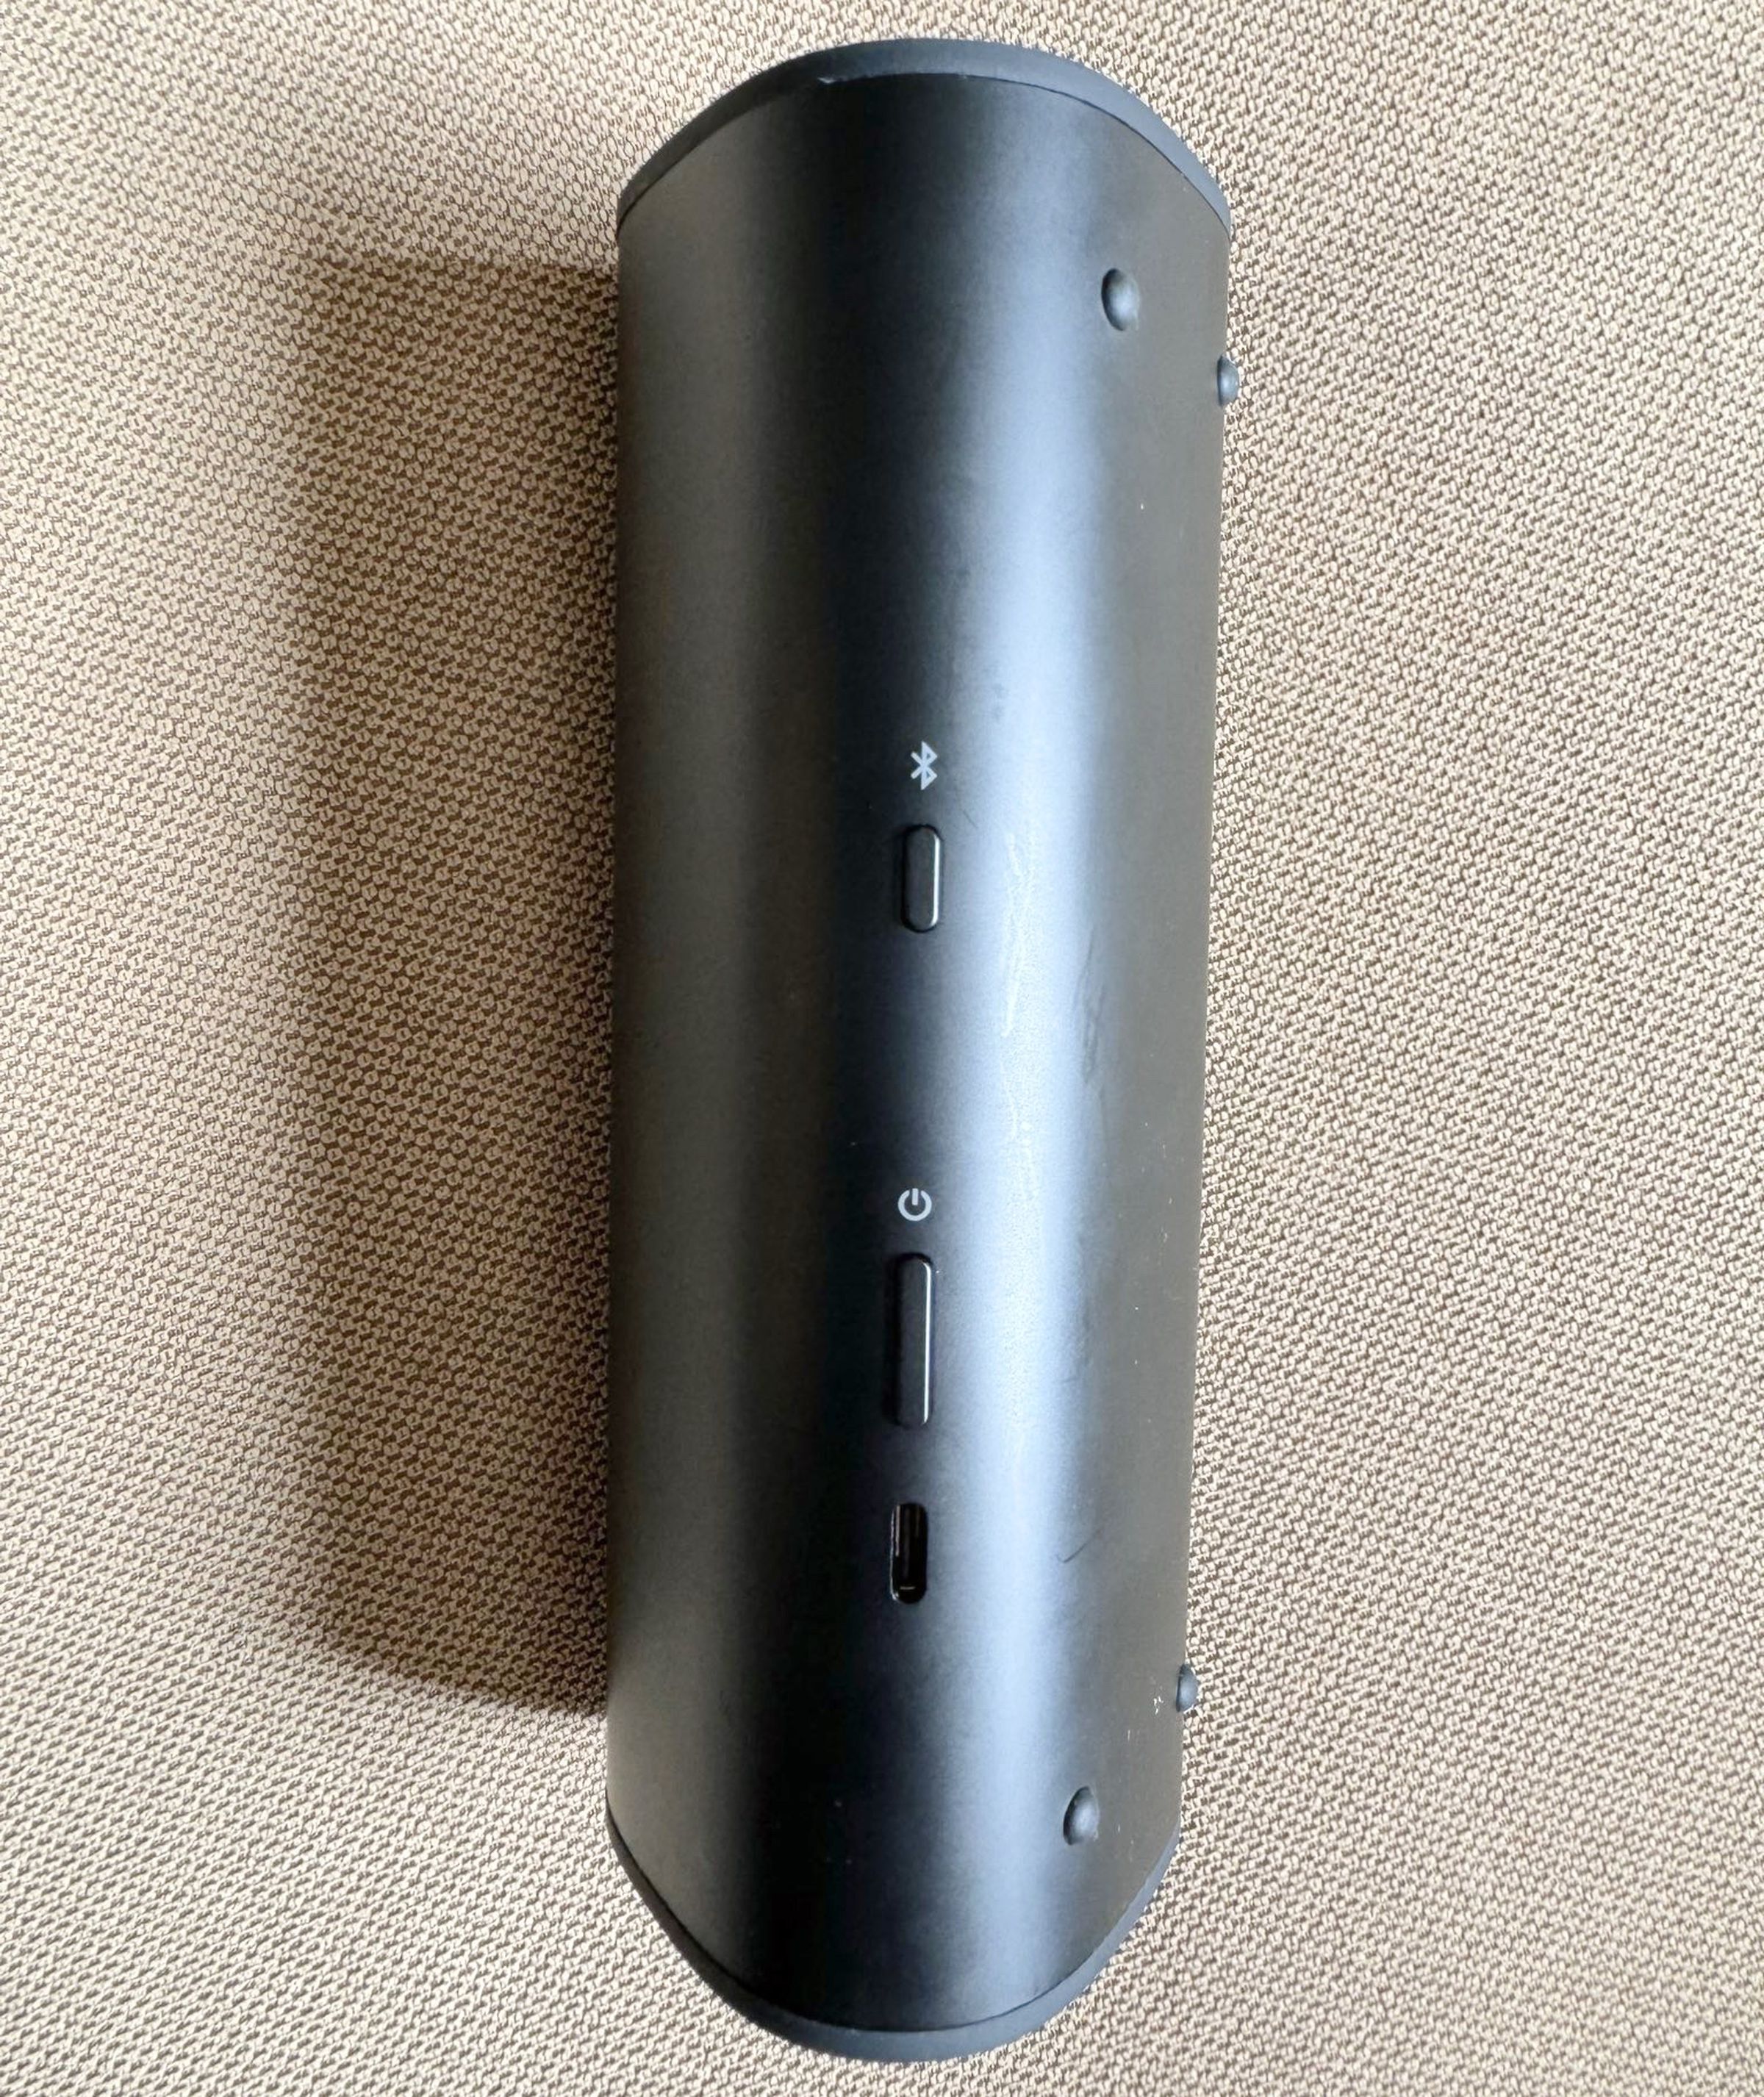 An image of the Sonos Roam 2 speaker in black.